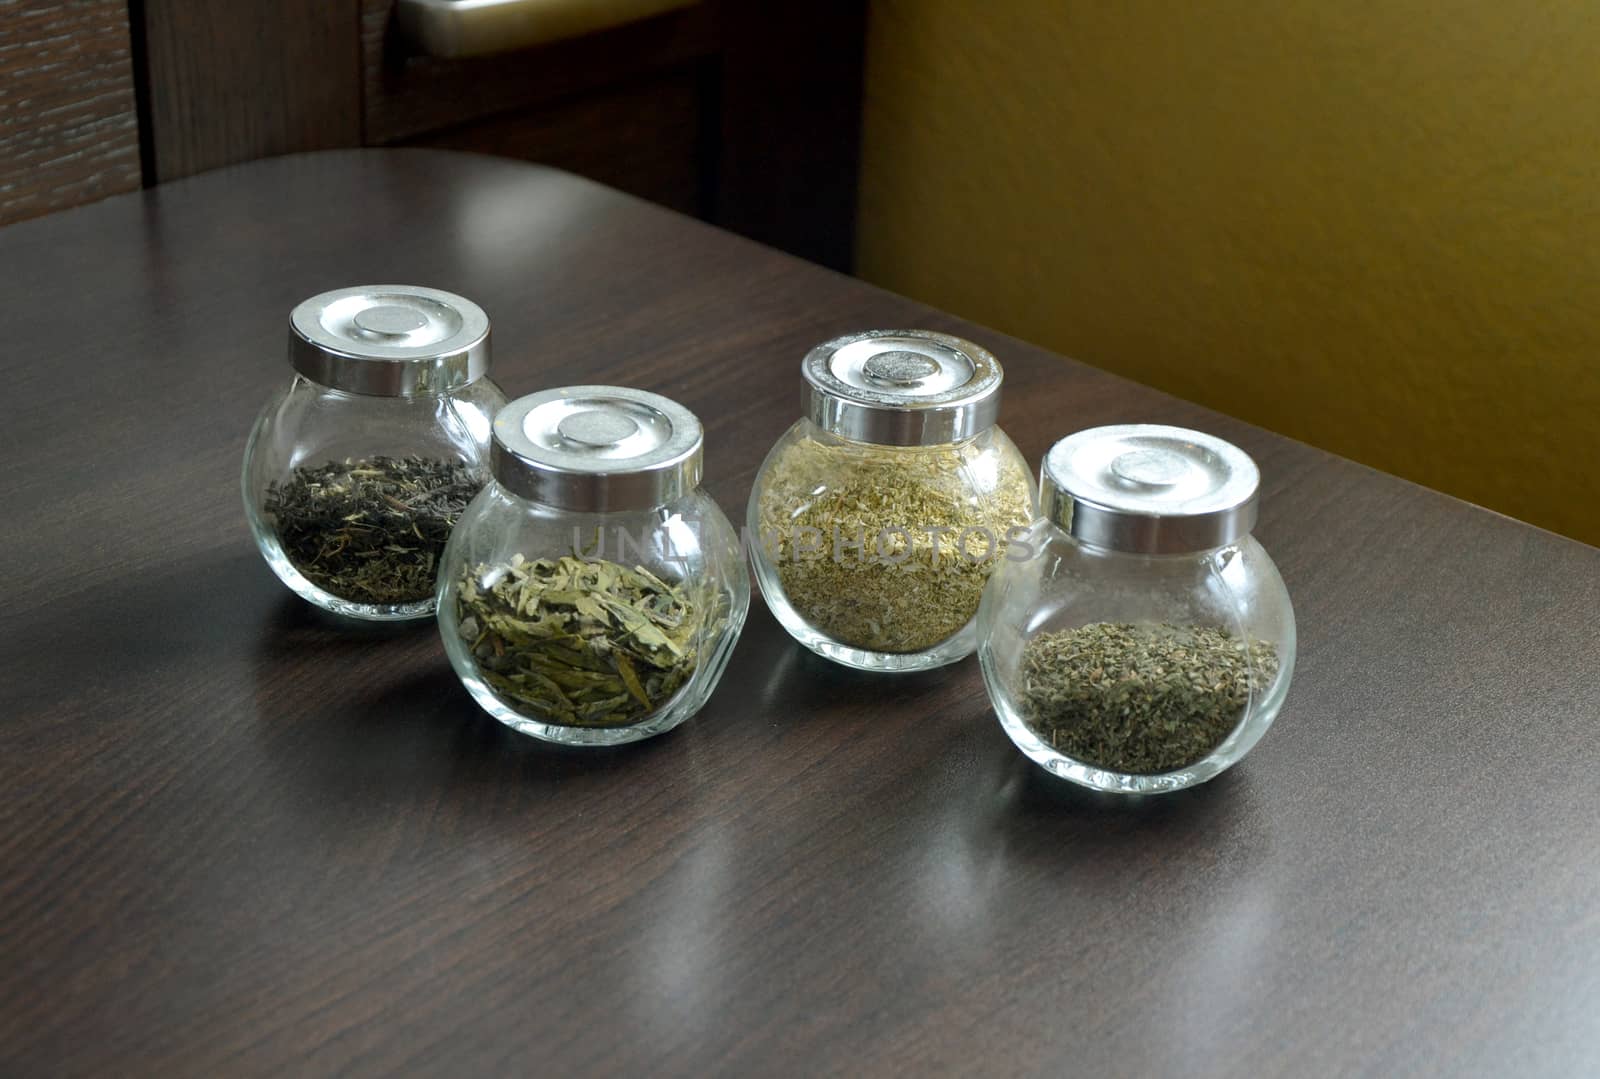 Tea and herbs